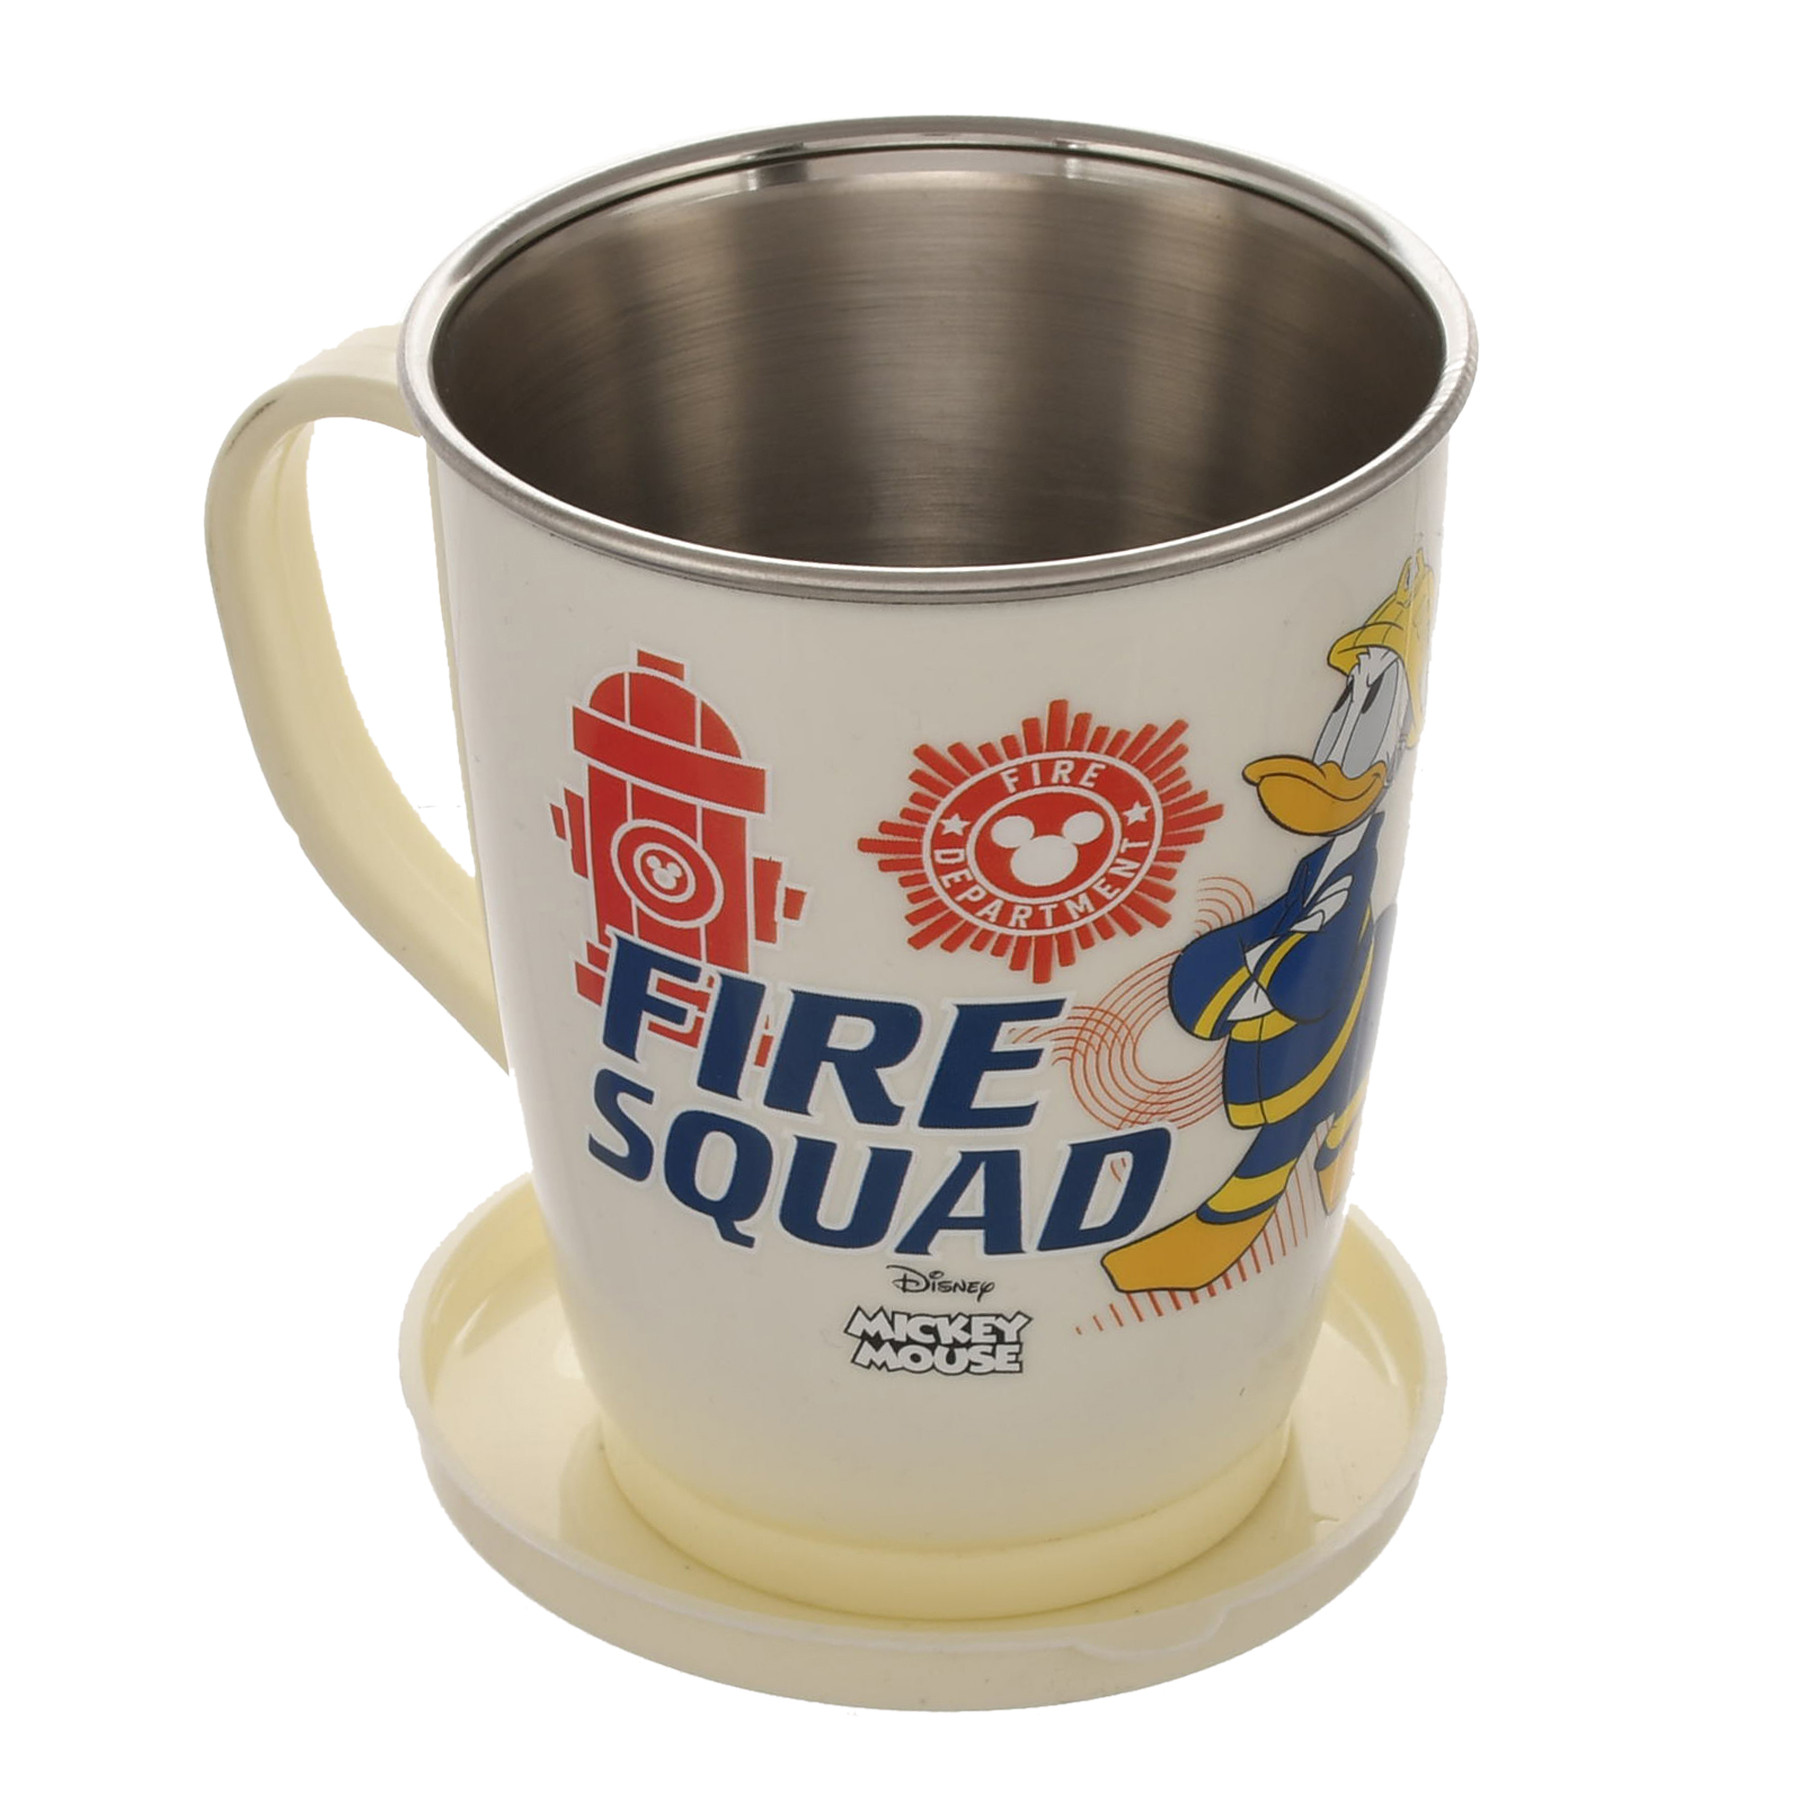 Kuber Industries Disney Printed Food Grade BPA Free Tea/Coffee Mug for Coffee Tea Cocoa, Camping Mugs with Lid, Pack of 6 (Light Grey & Cream)